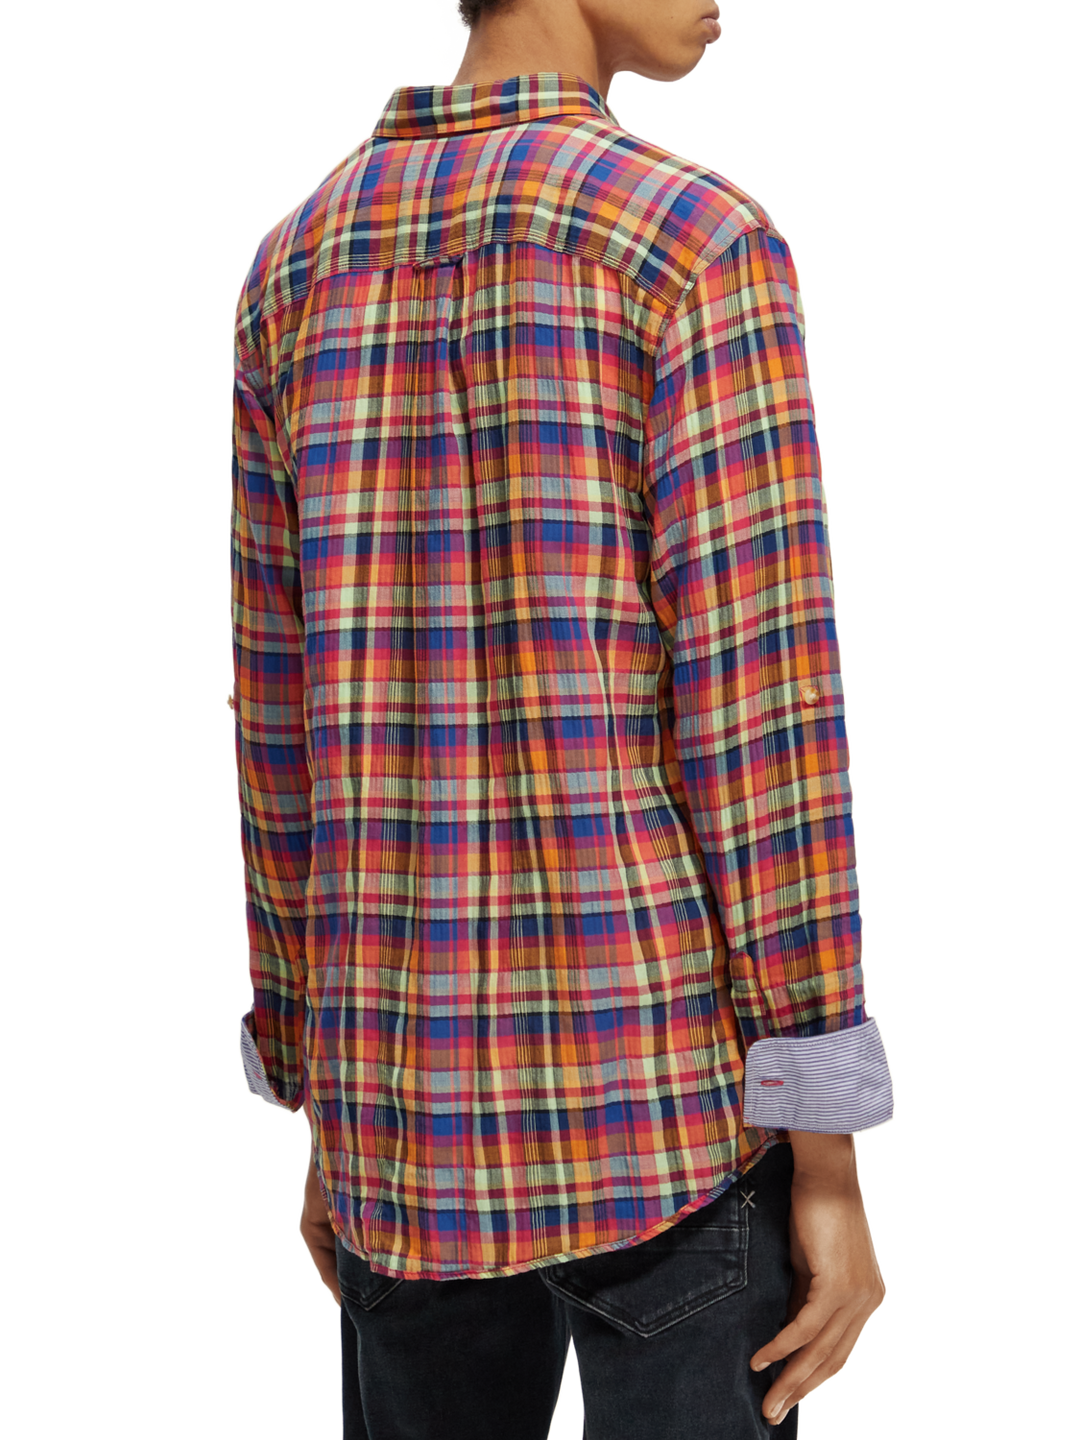 Lightweight Seersucker Shirt in Red Multi Check | Buster McGee 